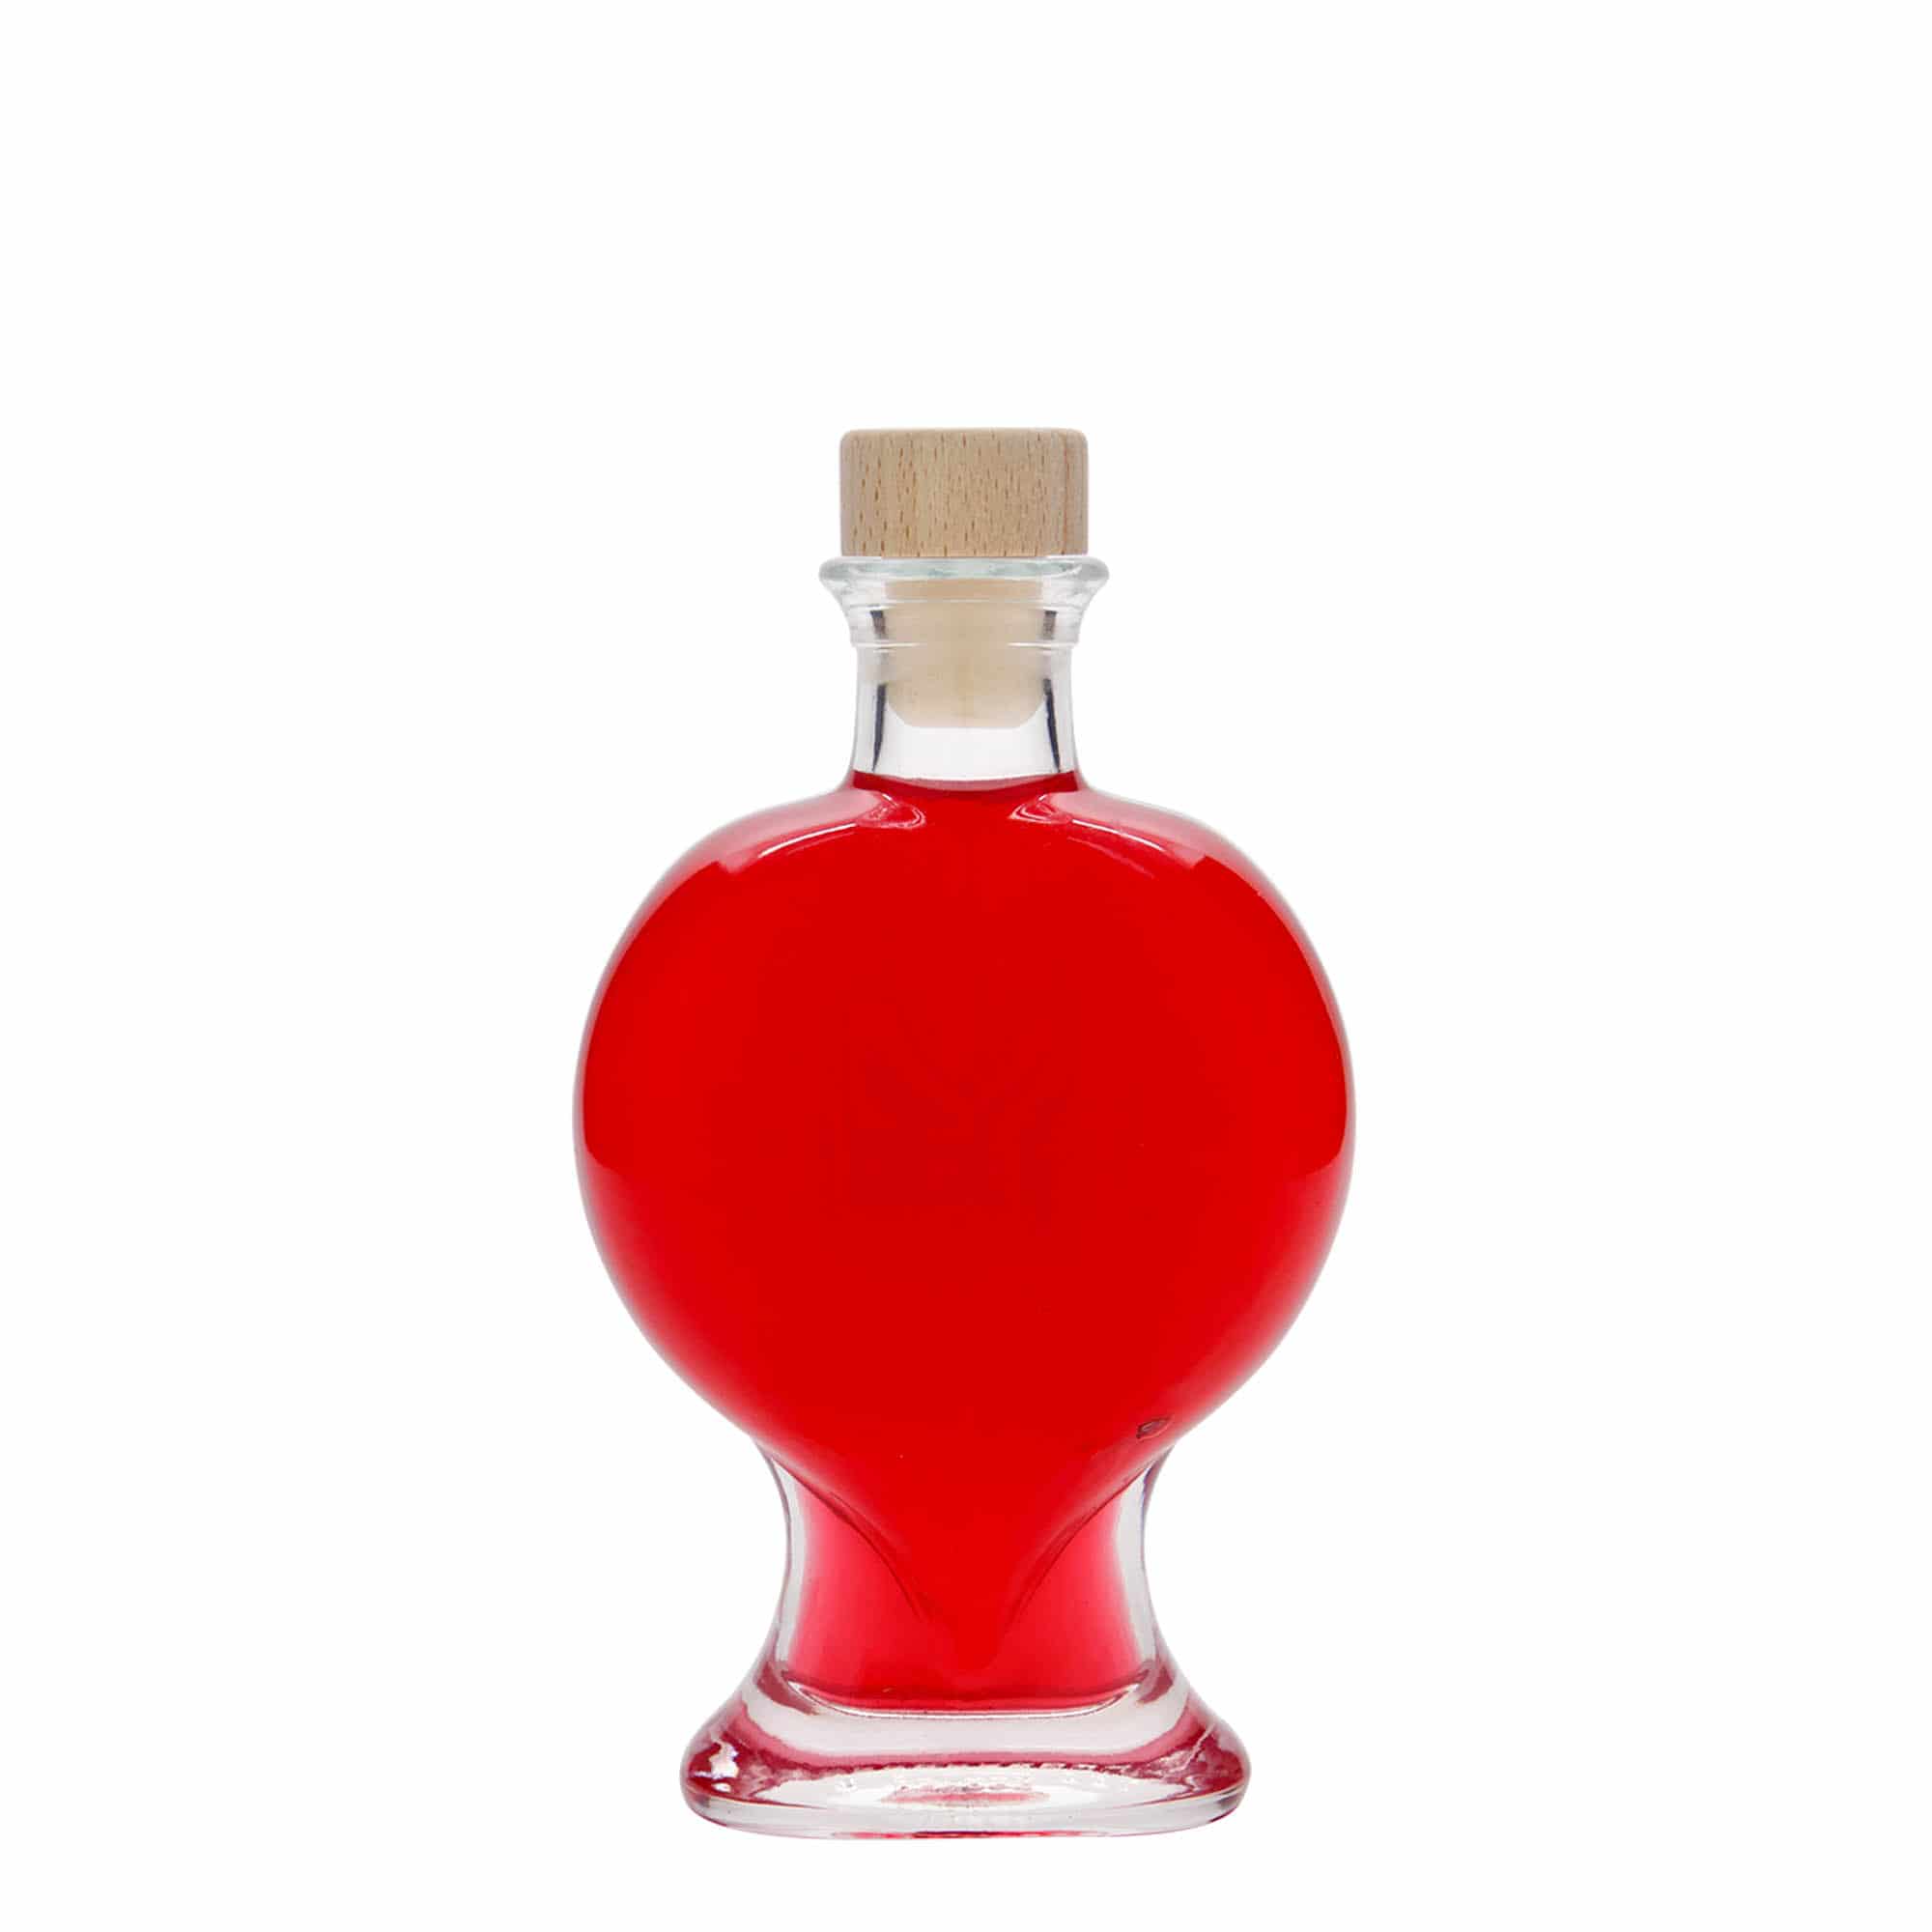 200 ml glass bottle 'Heart', closure: cork